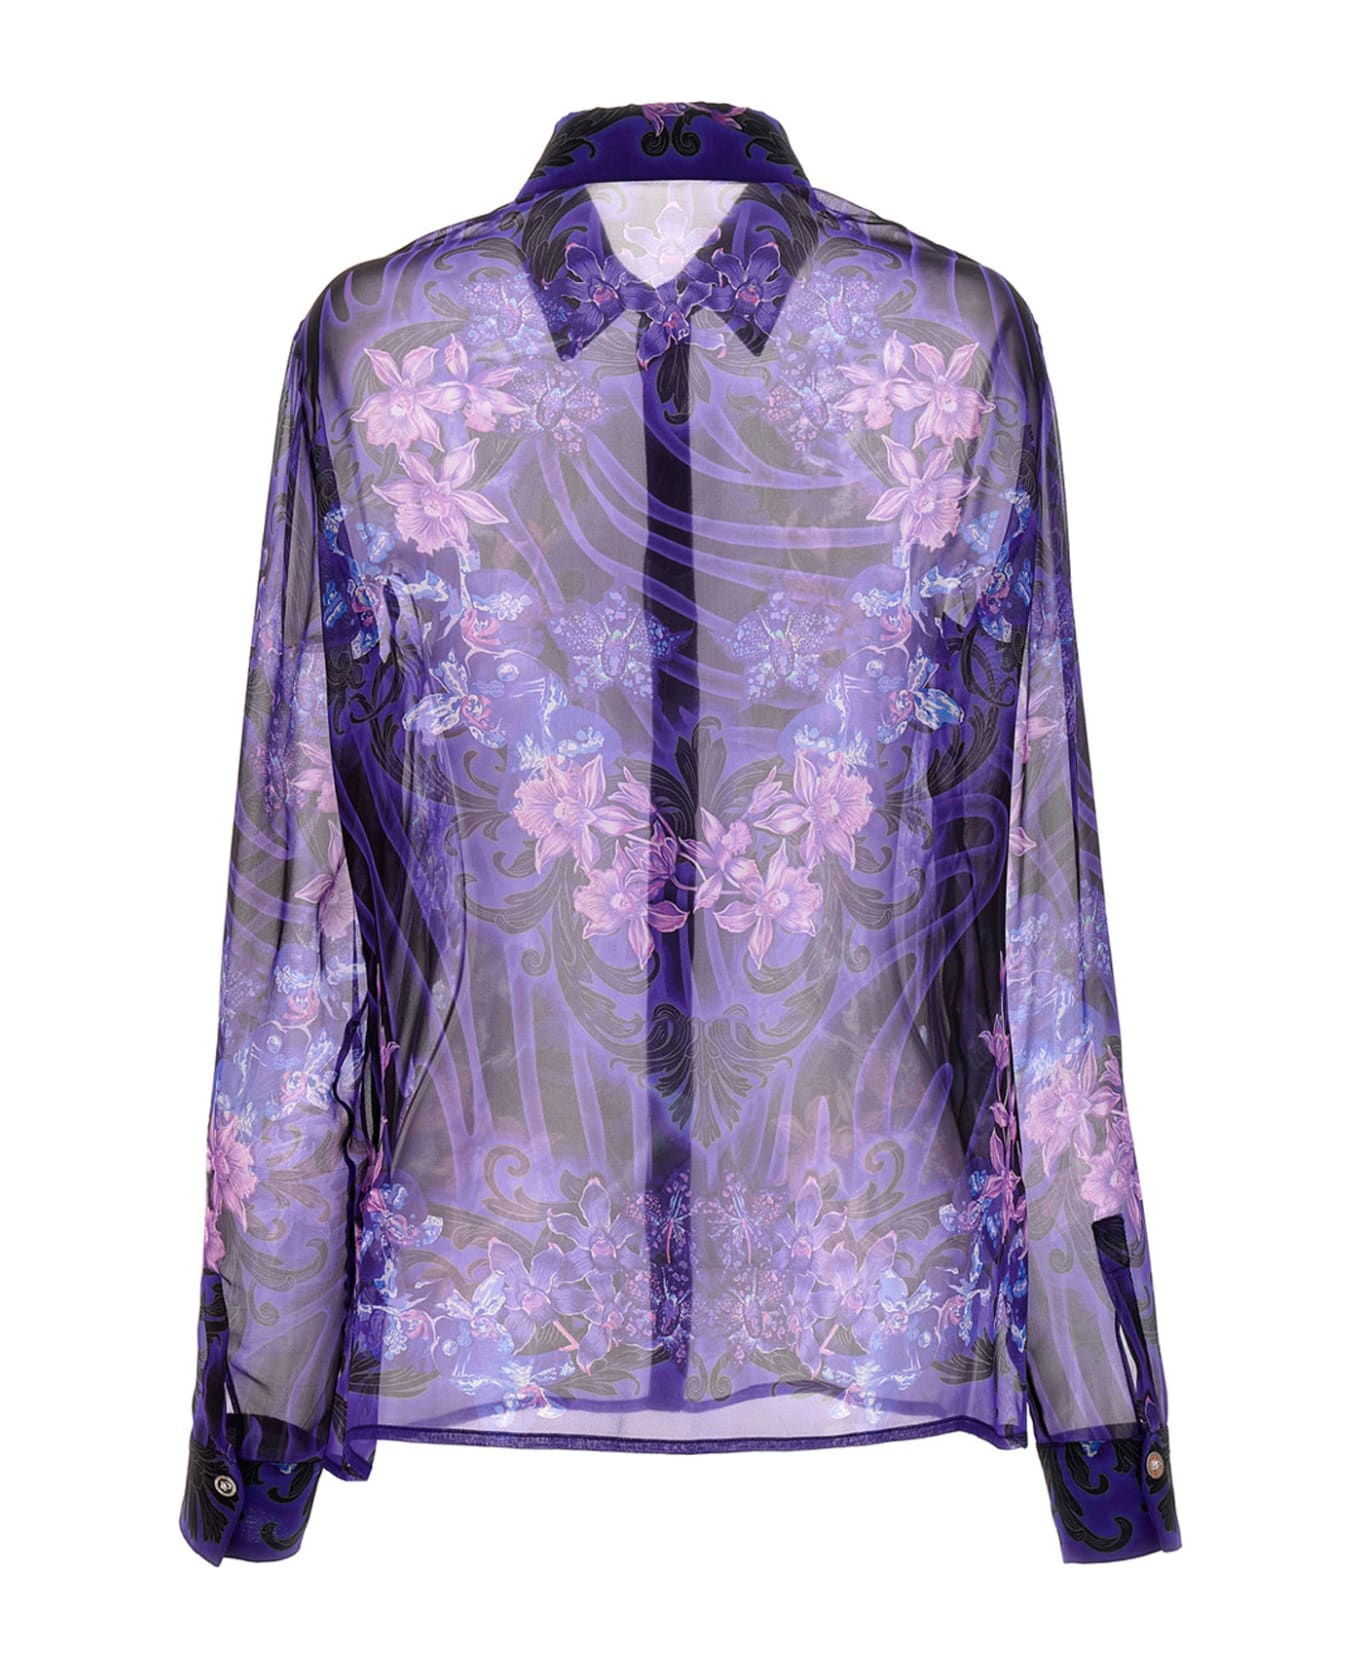 Versace 'barocco', 'barocco'shirt - Purple シャツ